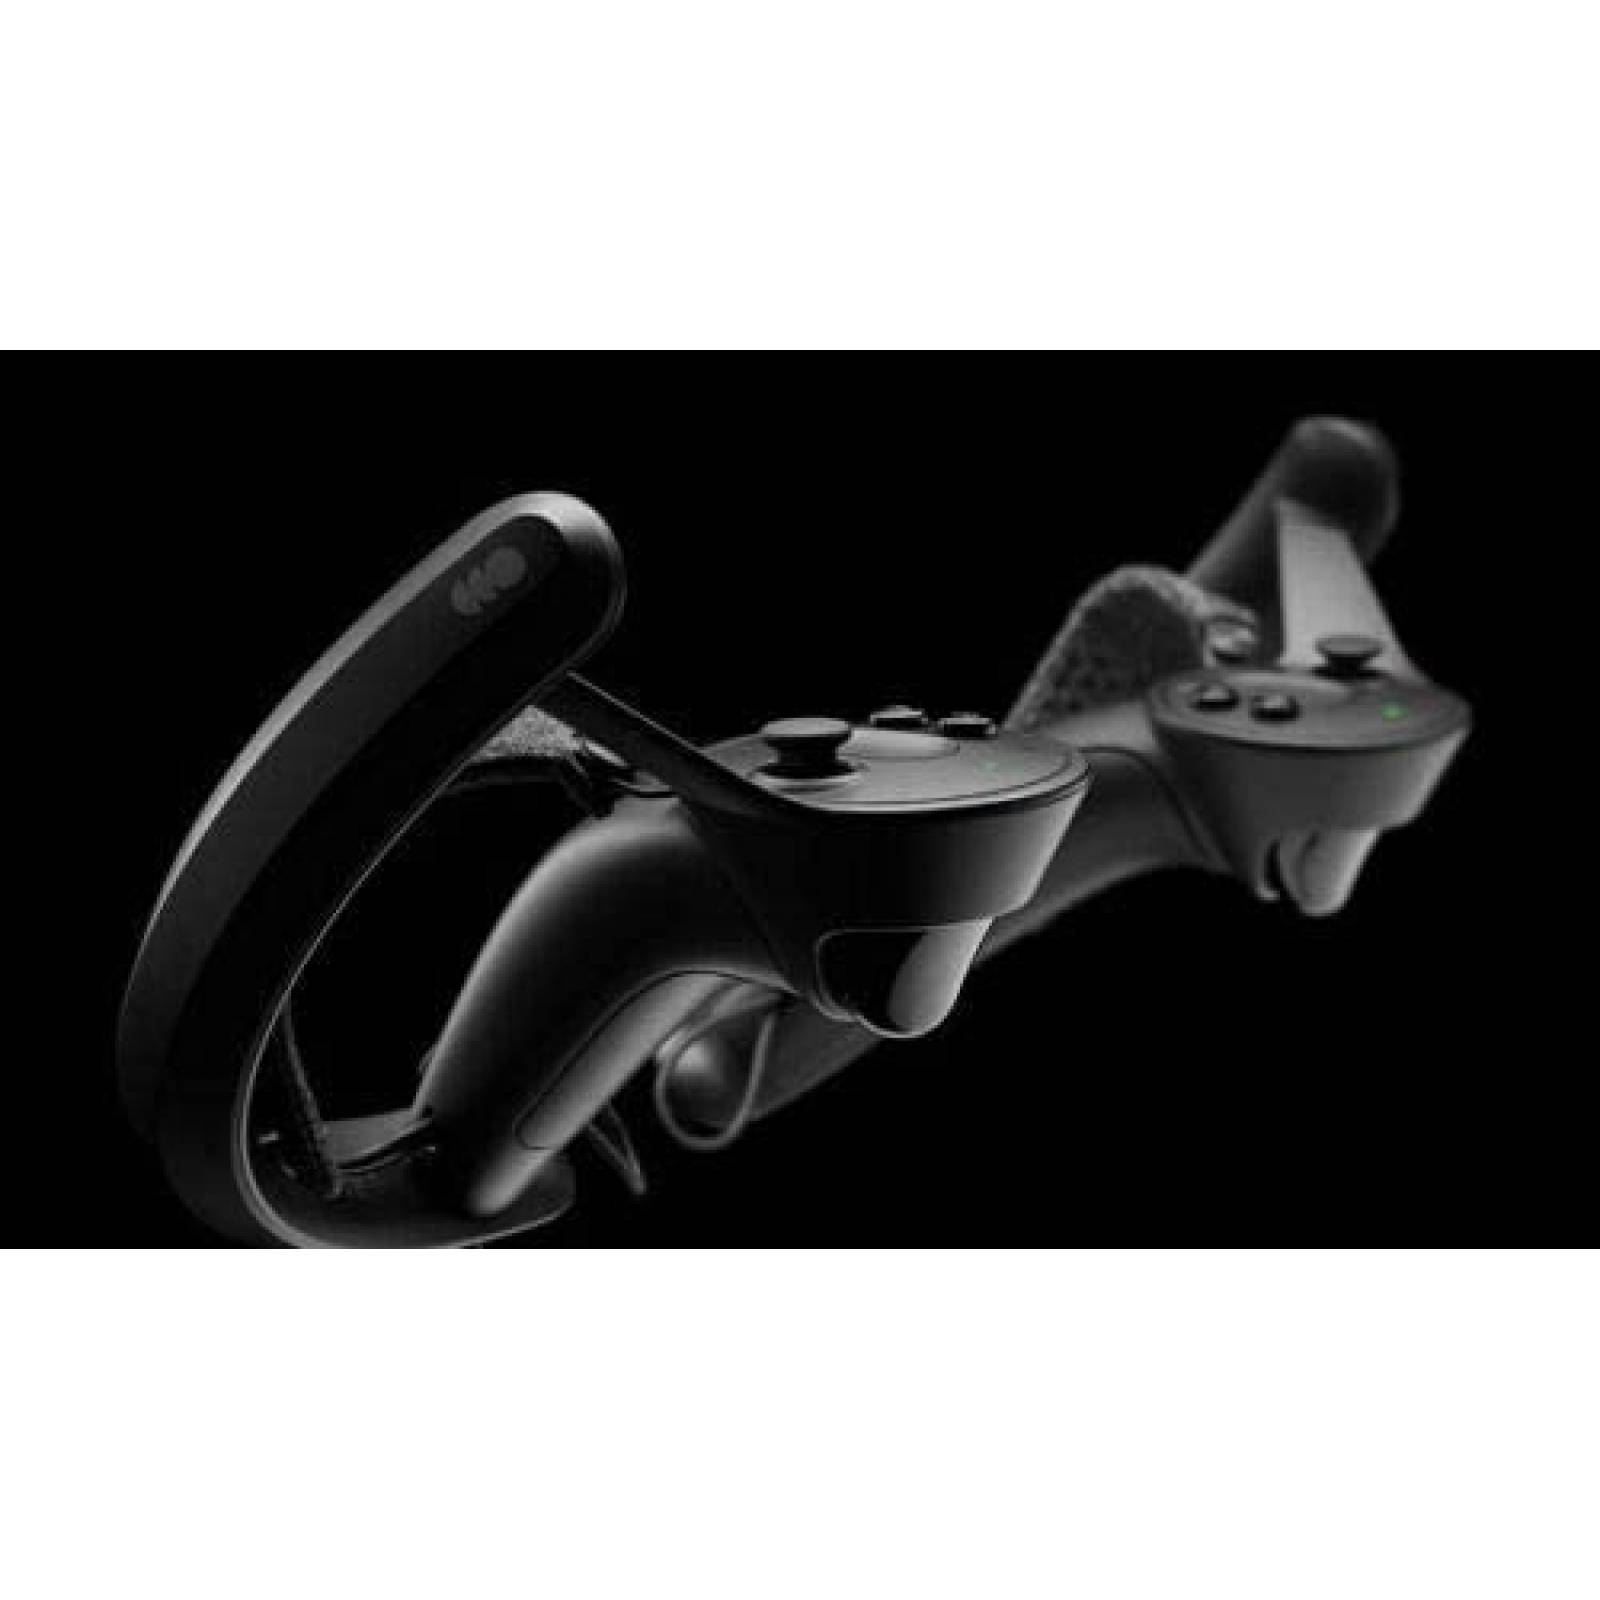 Kit Realidad Virtual Valve Index VR Visor y Controles -Negro